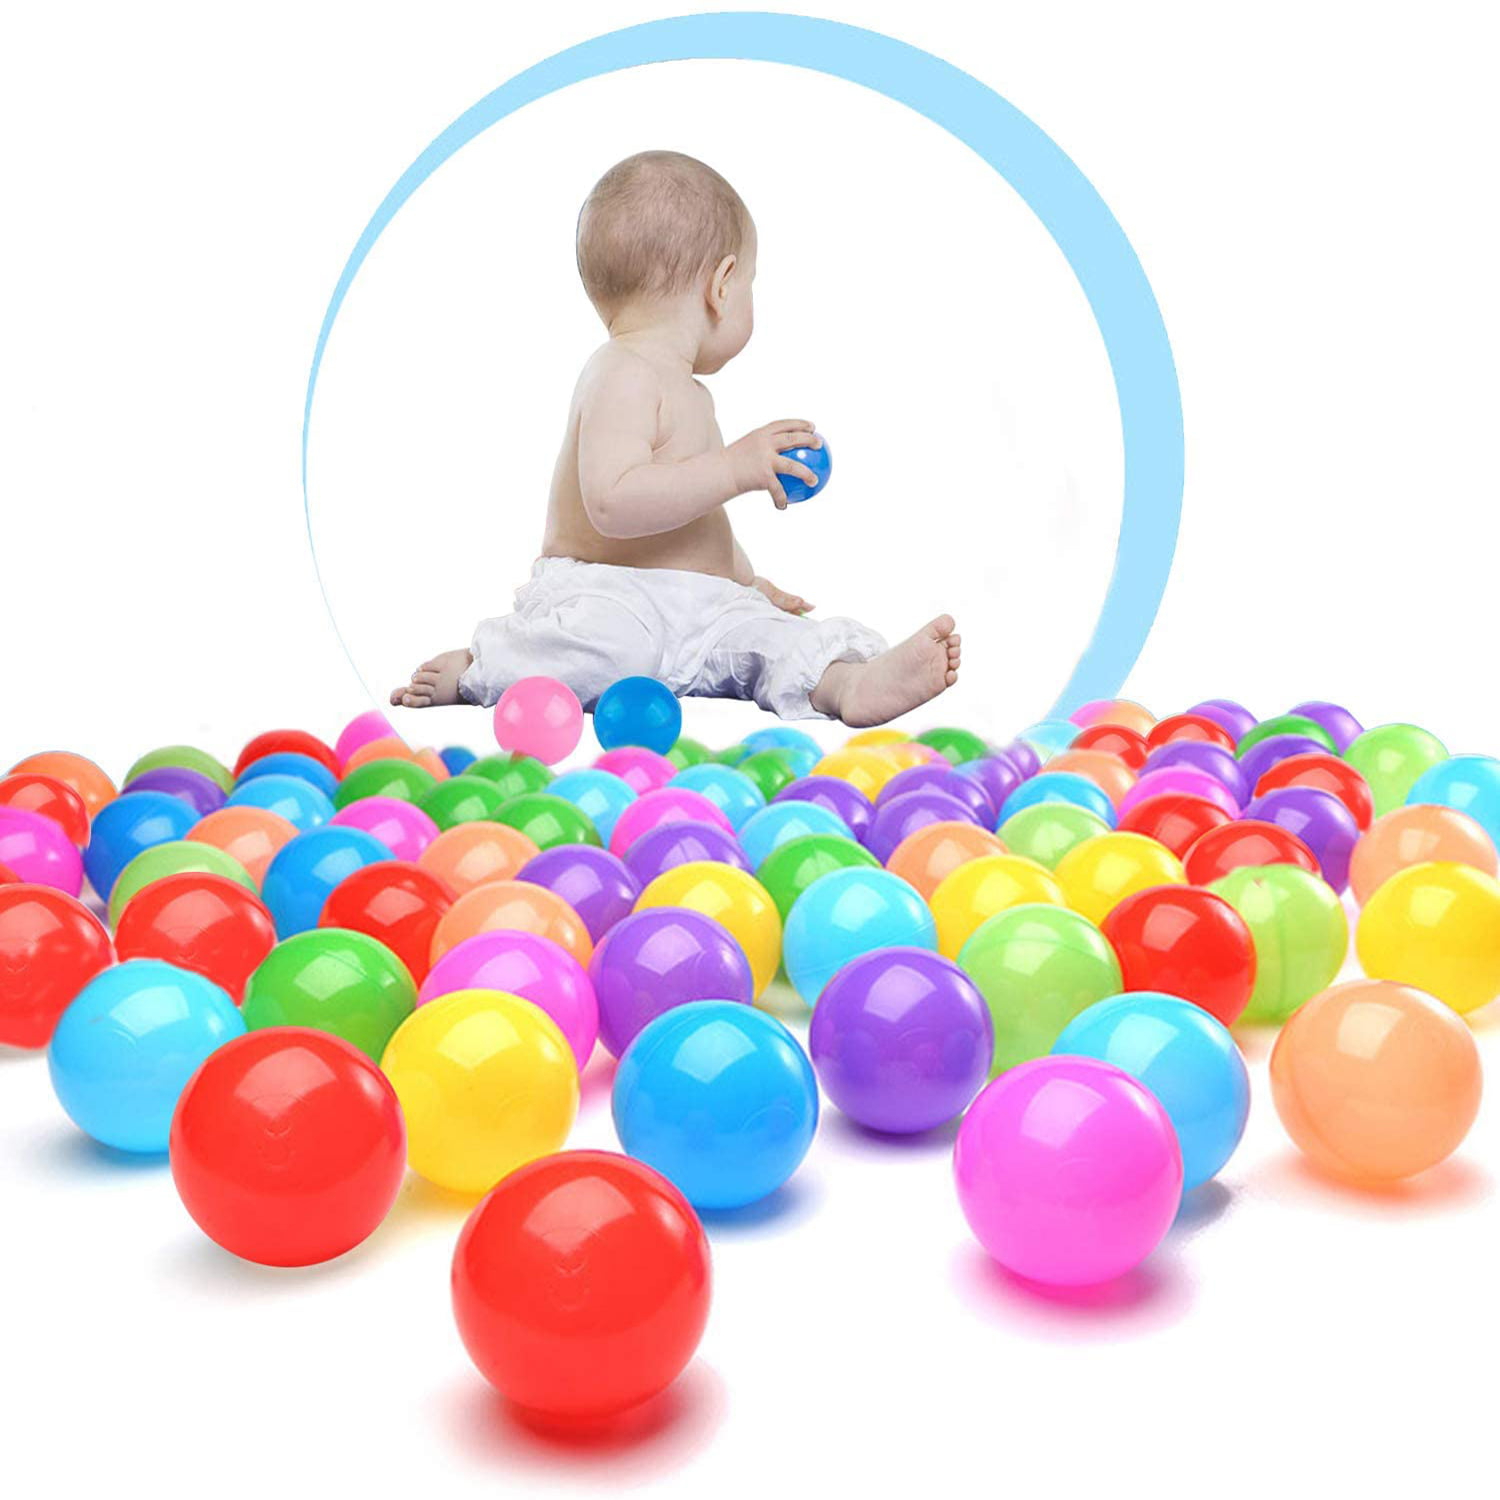 50-500PCS Soft Plastic Ocean Balls 5.5cm Baby Kids Swim Pool Play Pit Ball Toy 